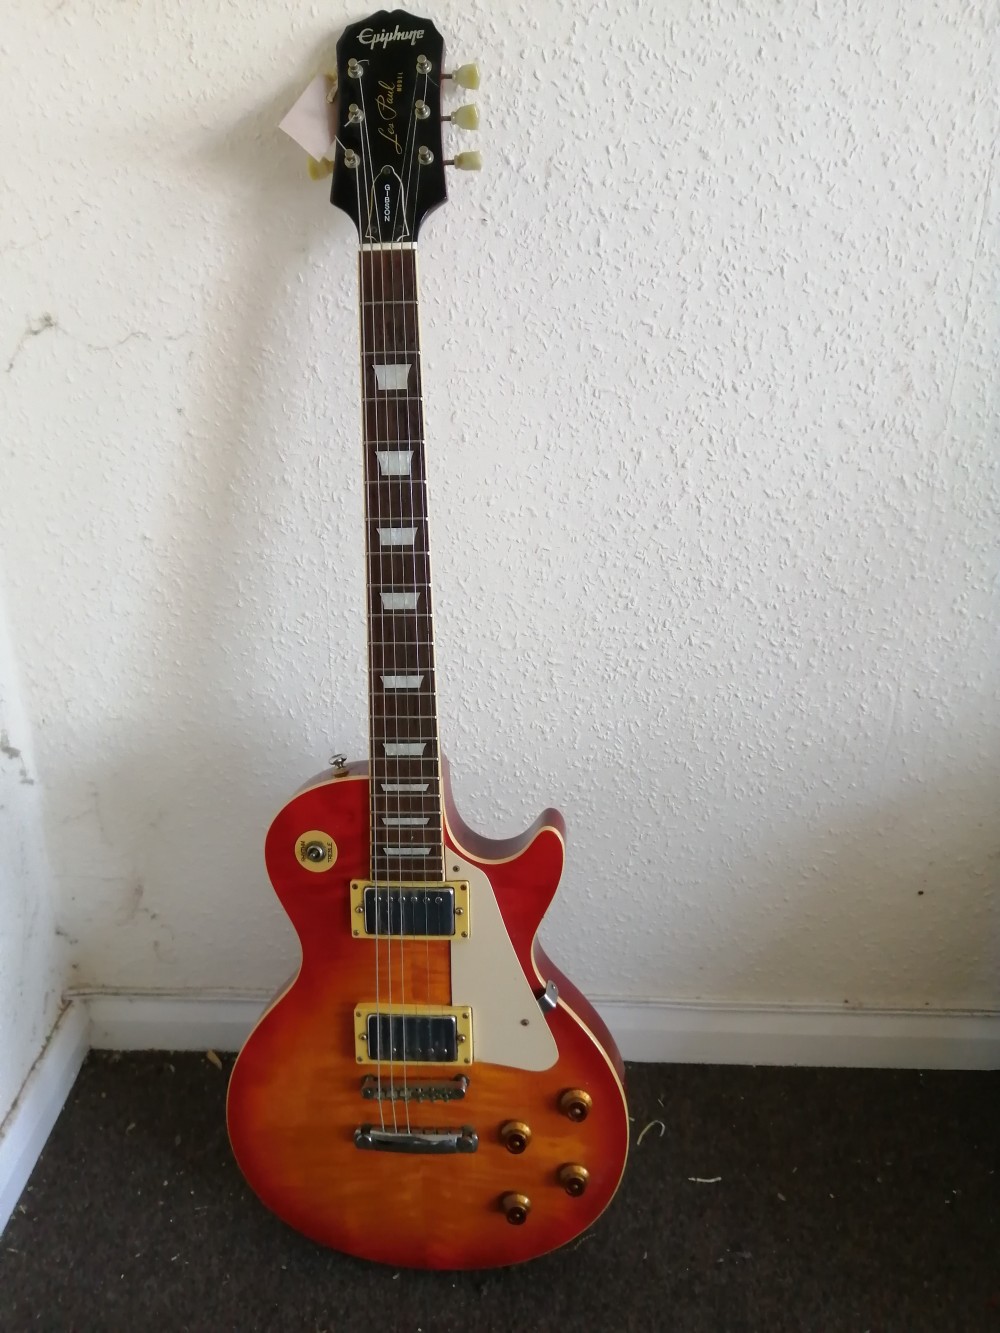 An Epiphone Les Paul guitar